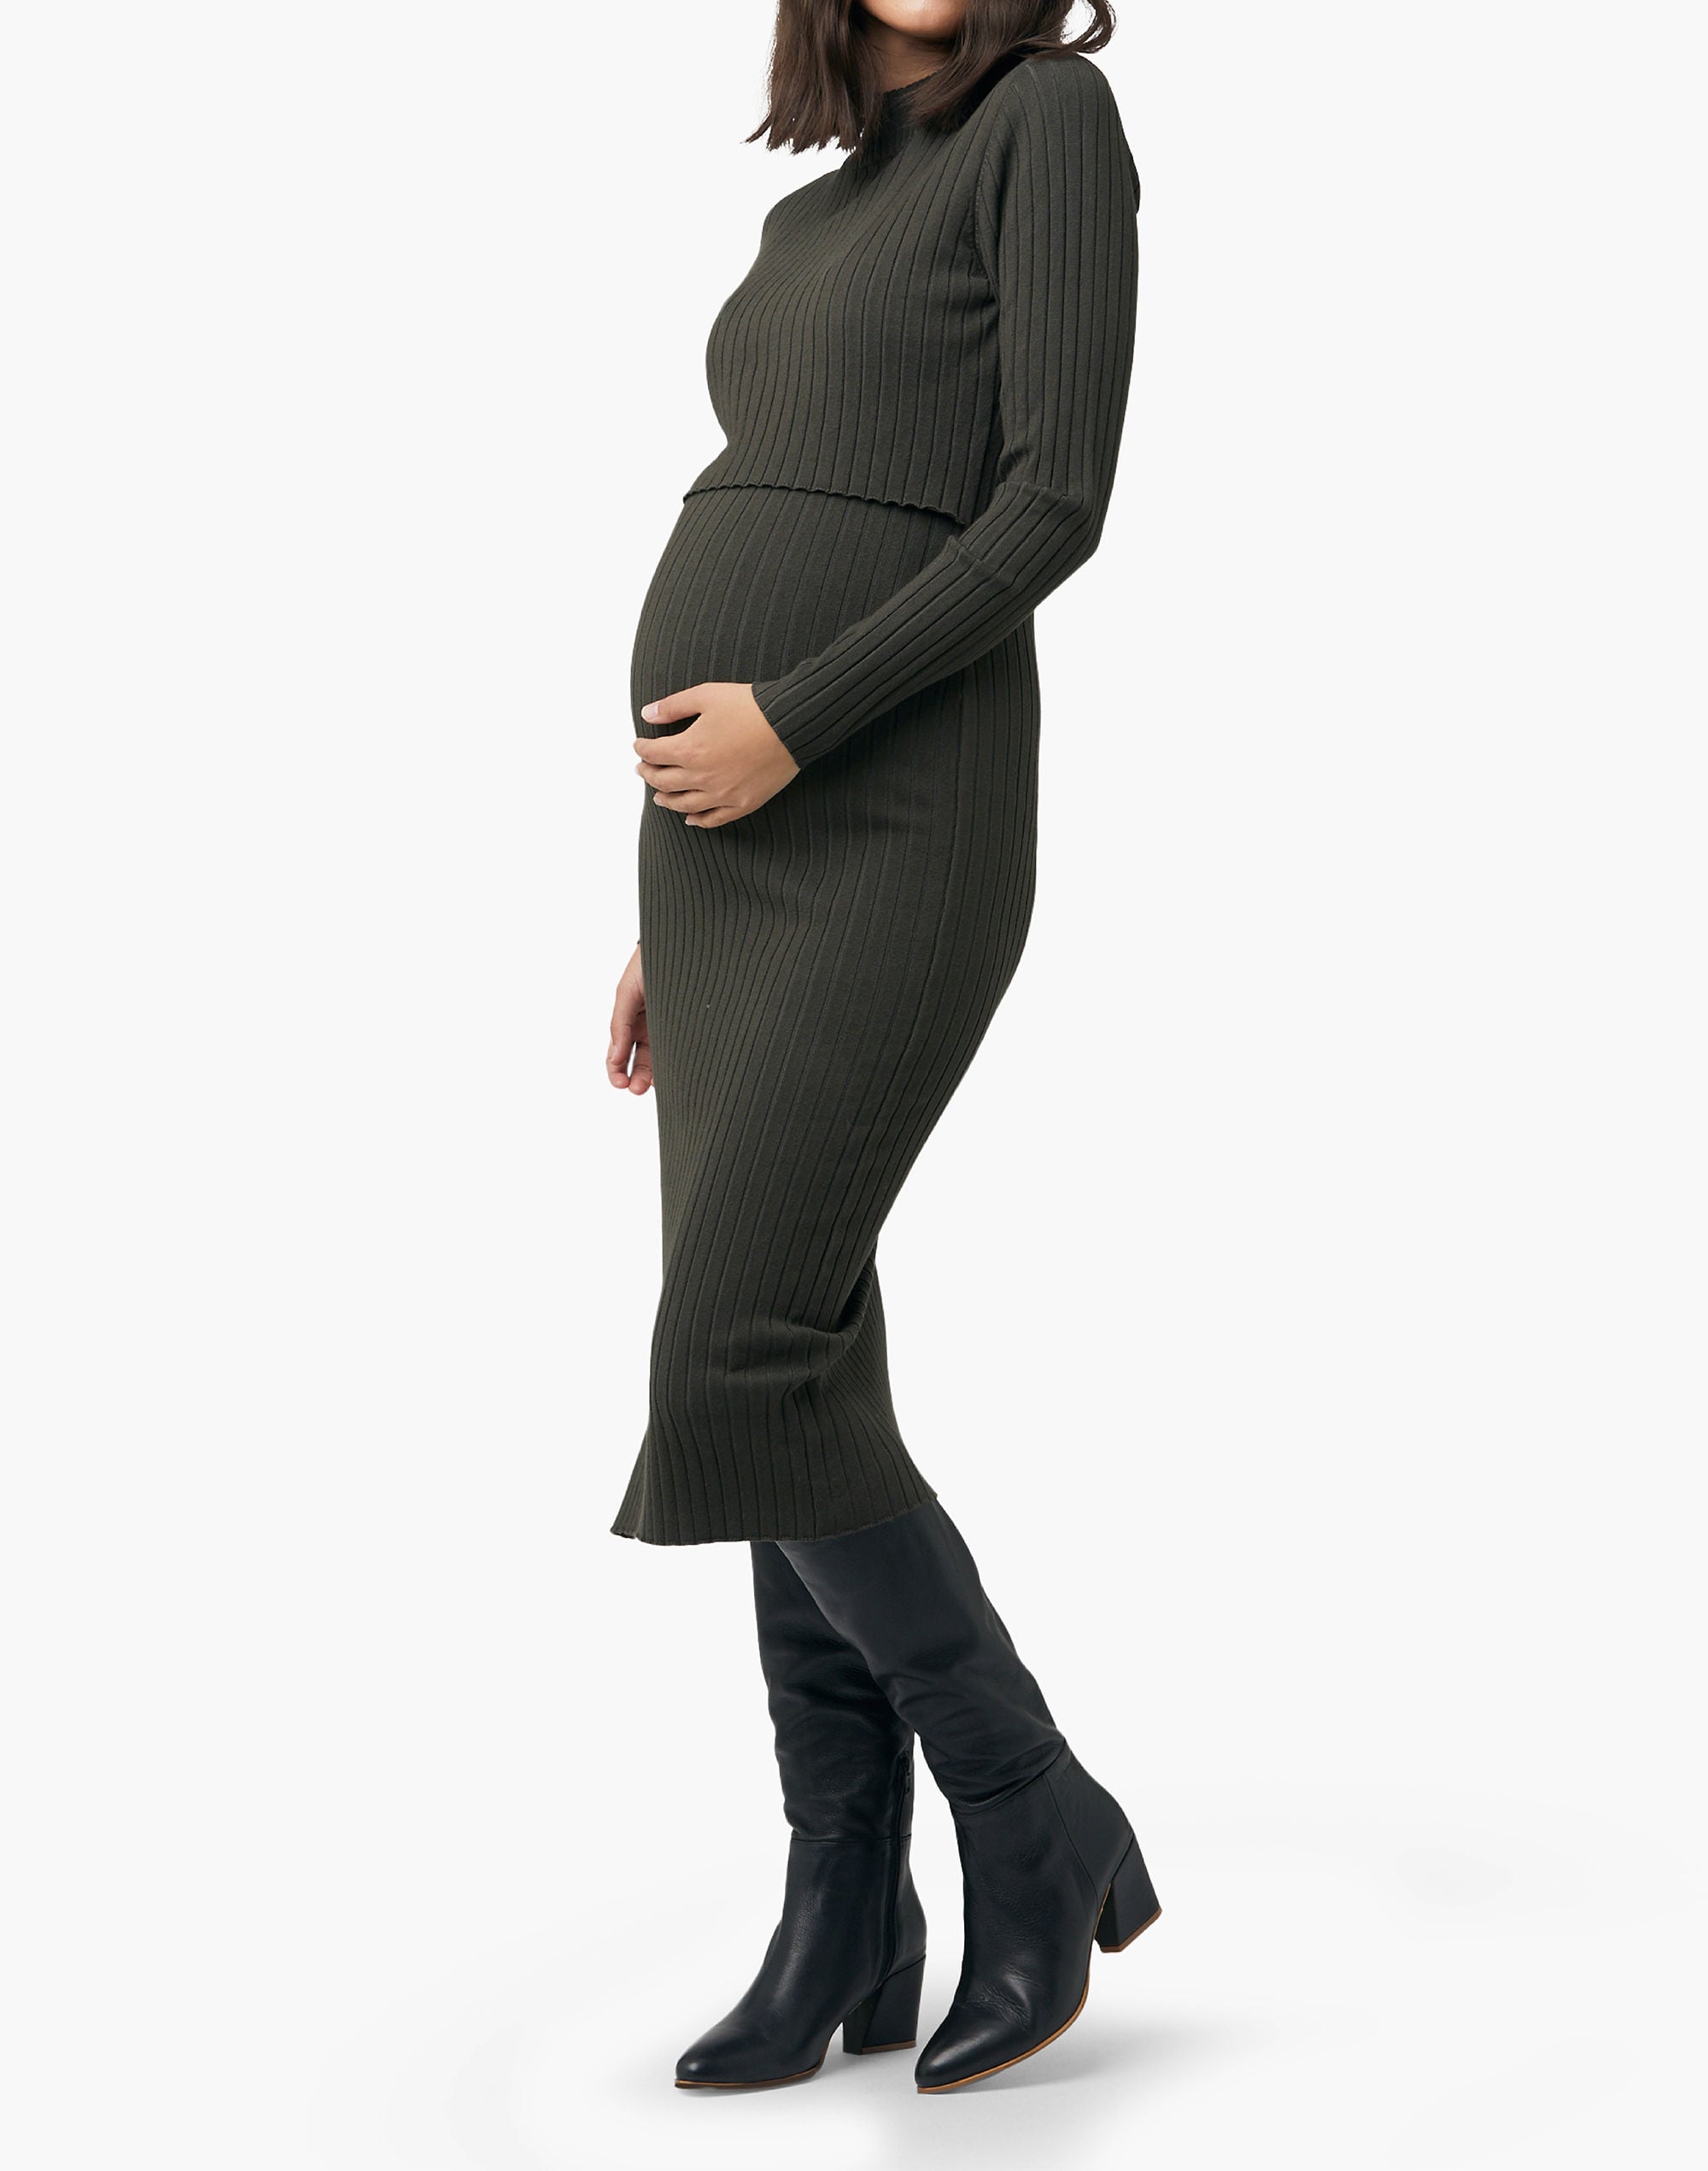 Ripe Maternity Carmen Rib Knit Tank Dress